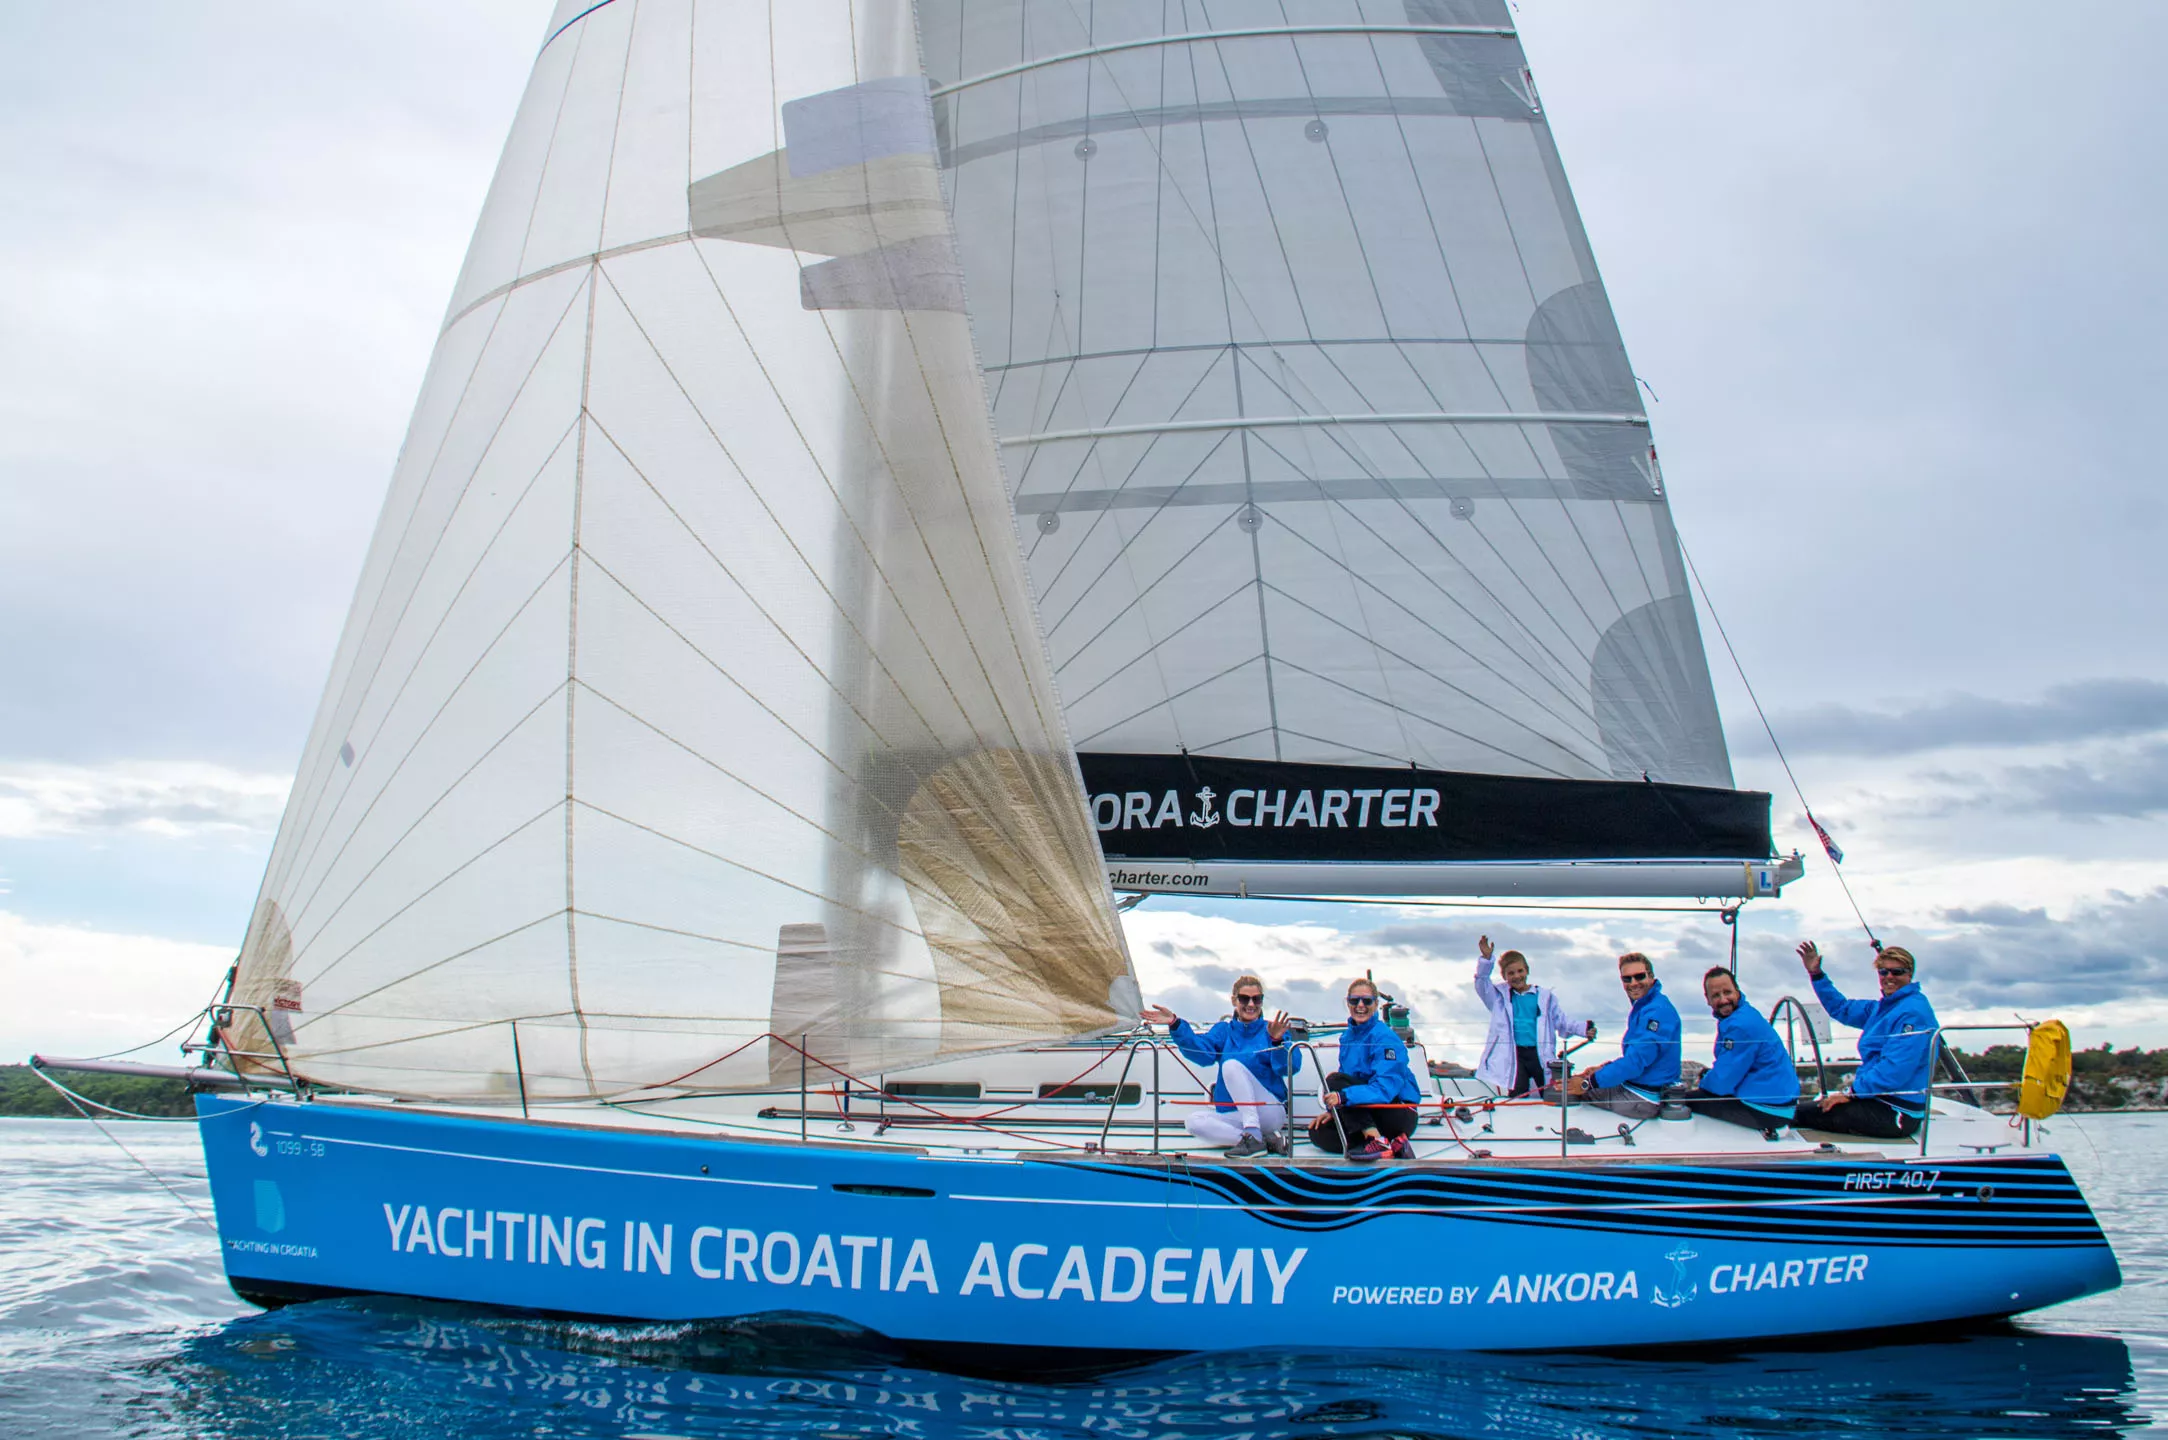 Croatia Sailing Academy in Croatia, Europe | Yachting - Rated 0.9